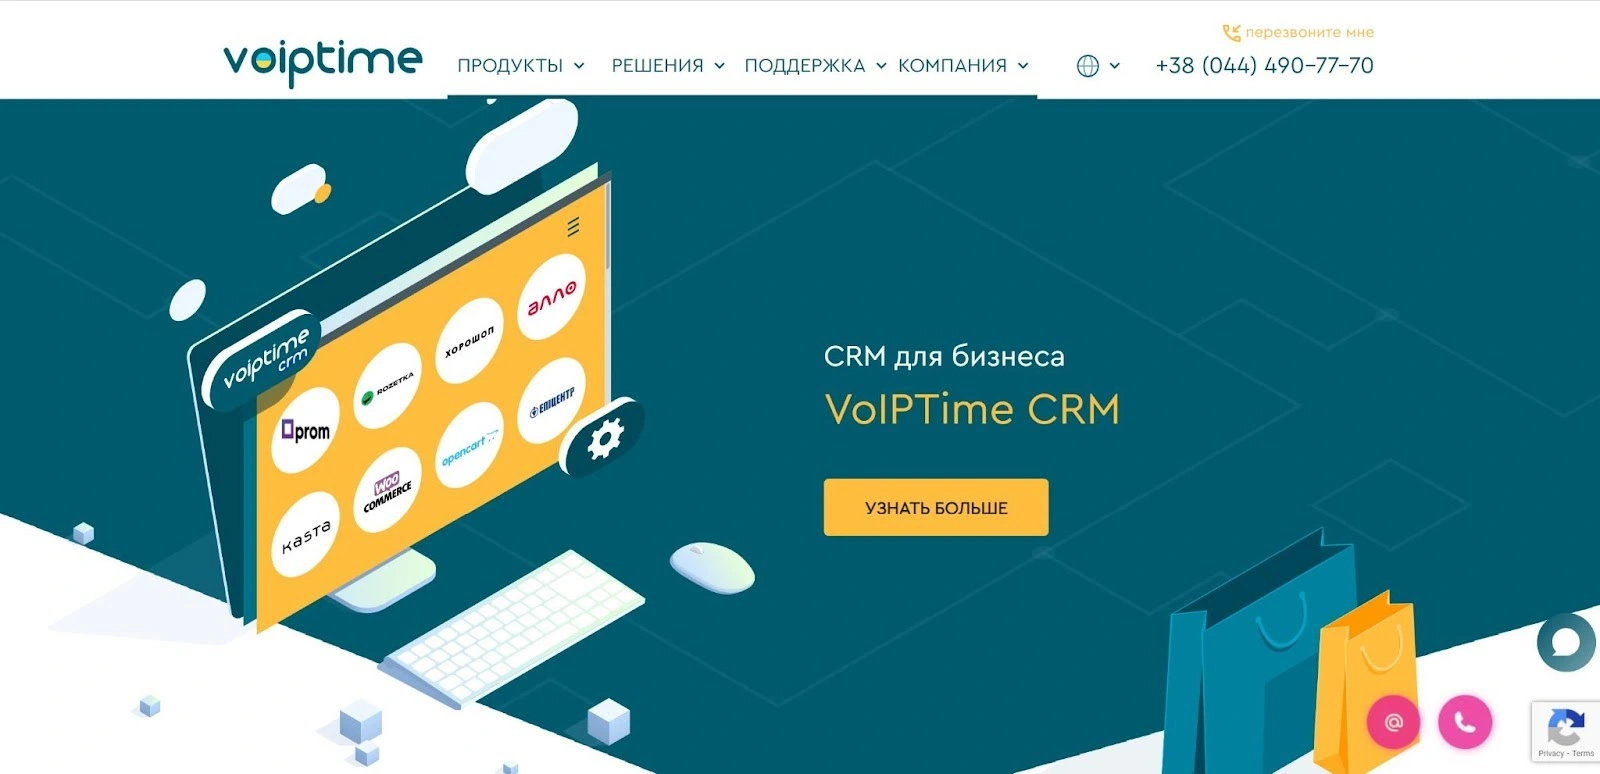 VoIPTime CRM продукты и решения